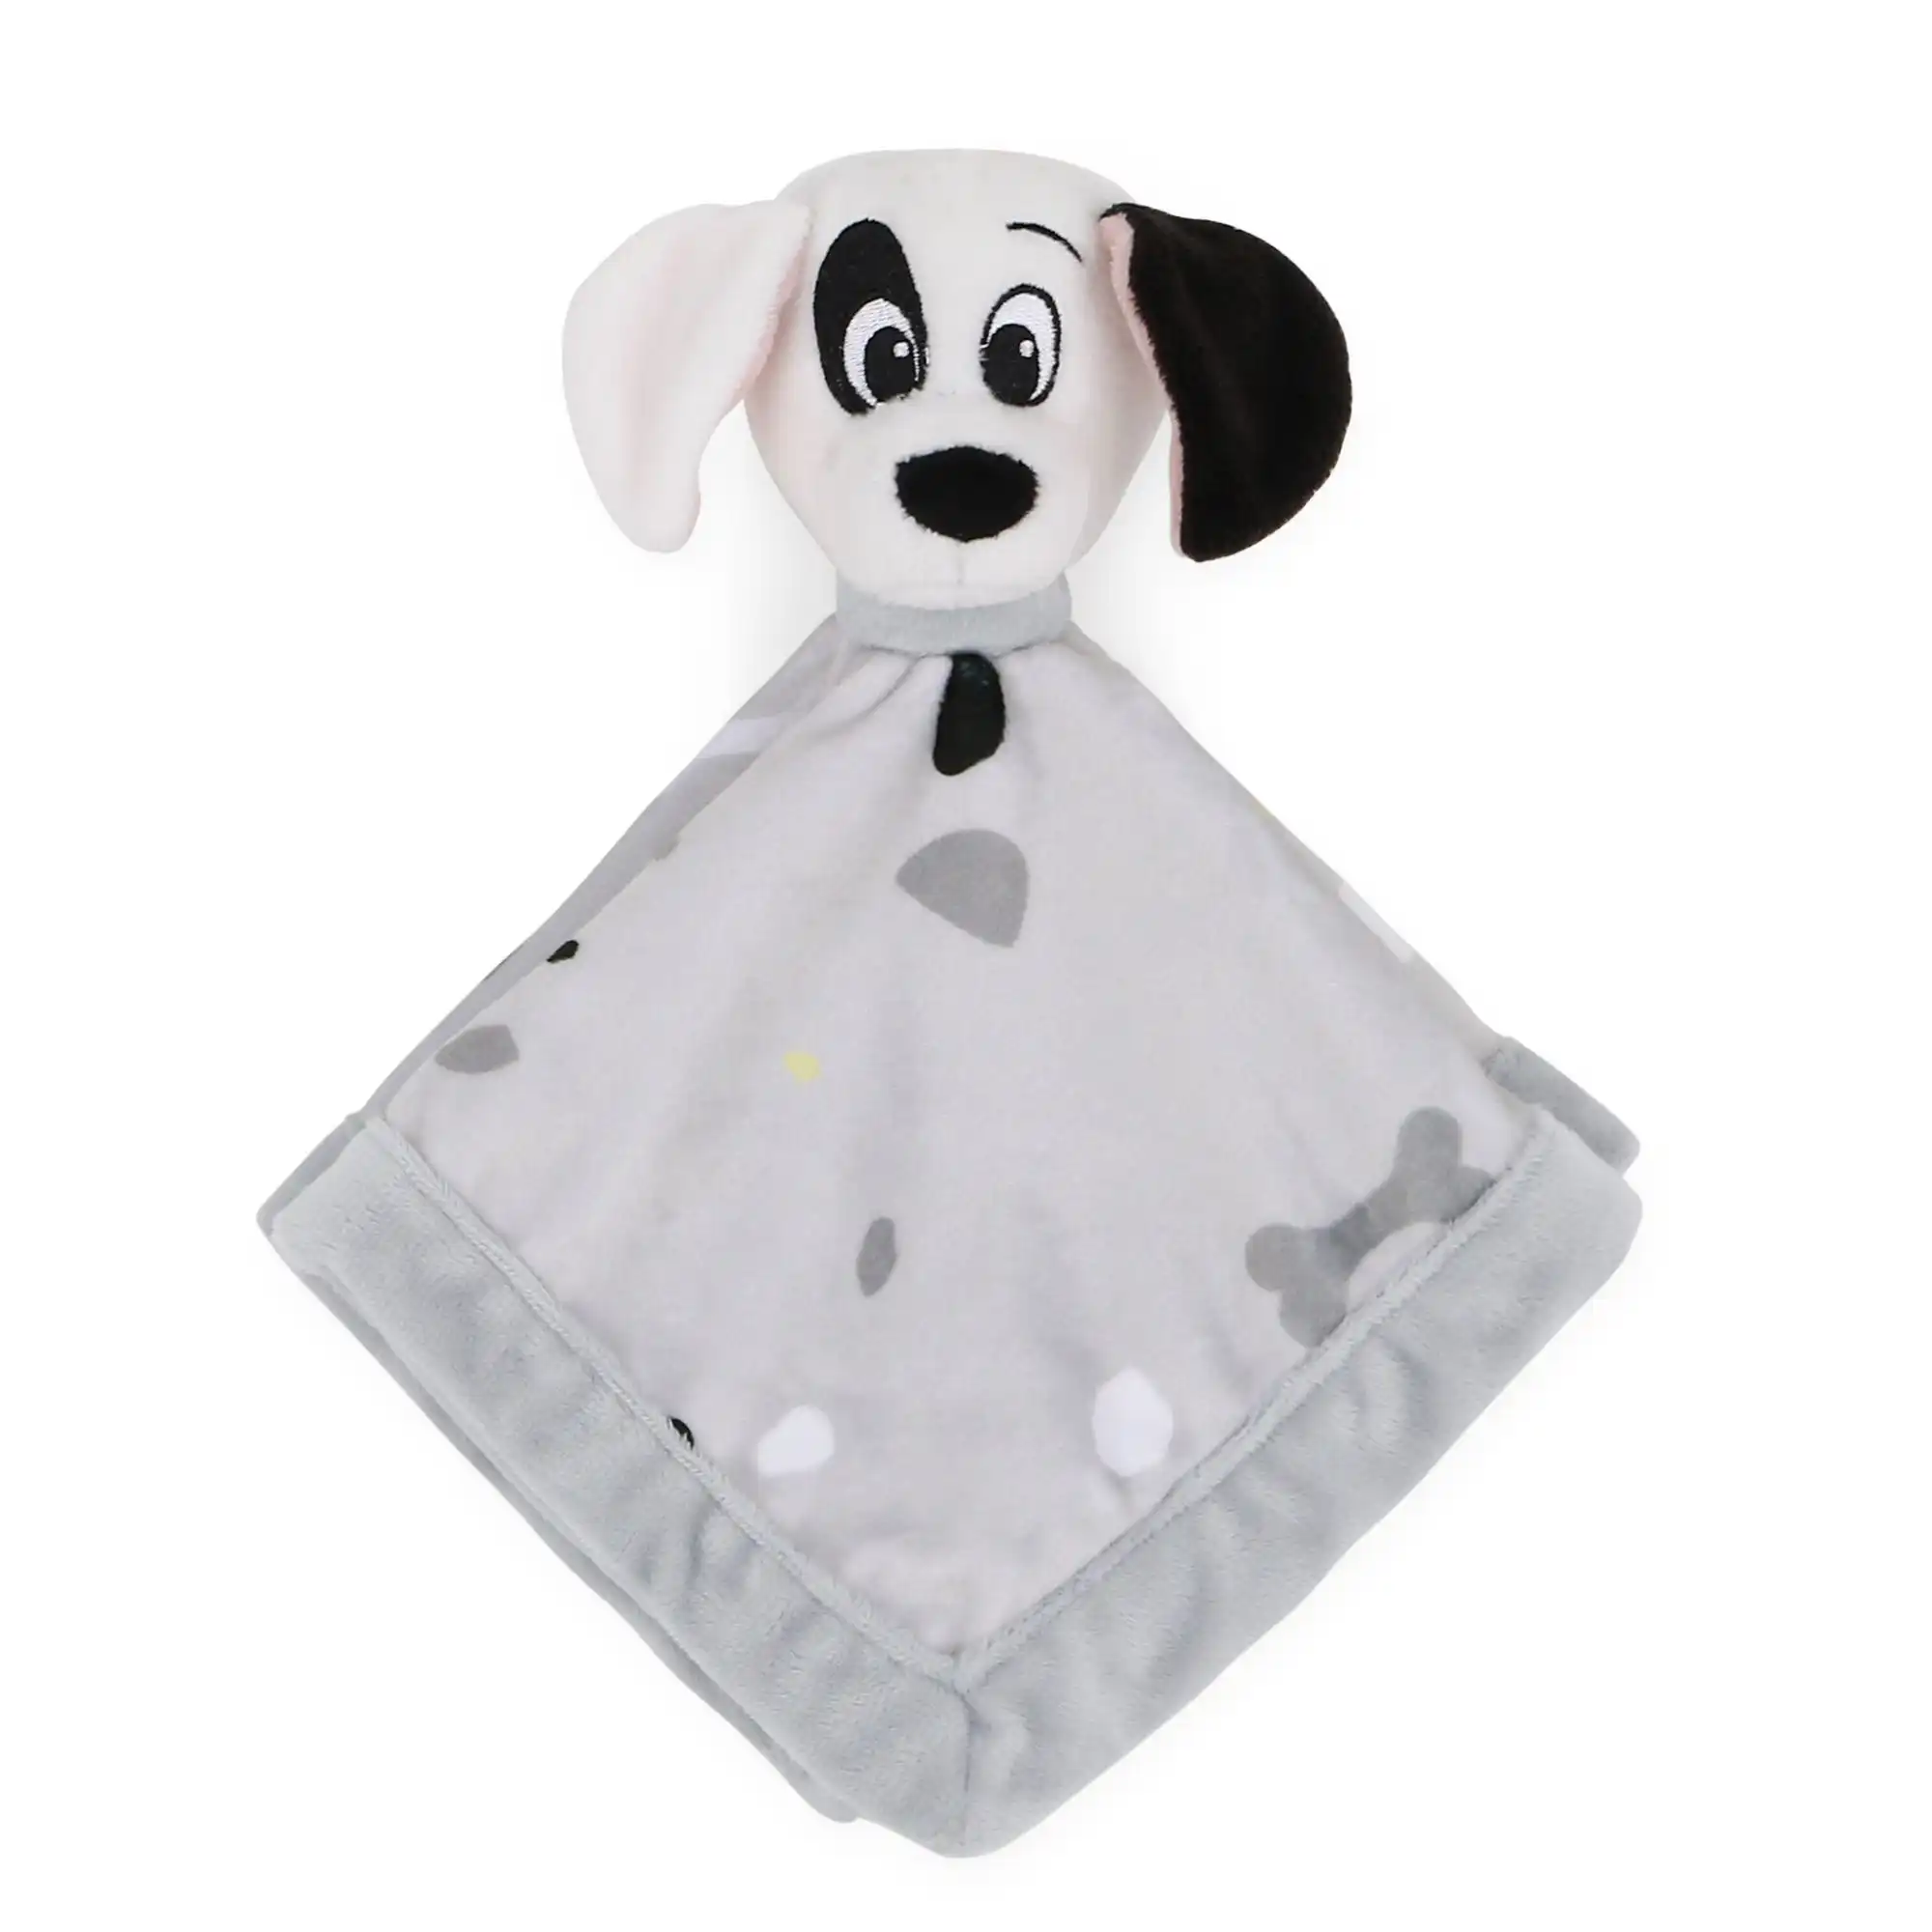 Disney Baby 101 Dalmatians Security Blanket